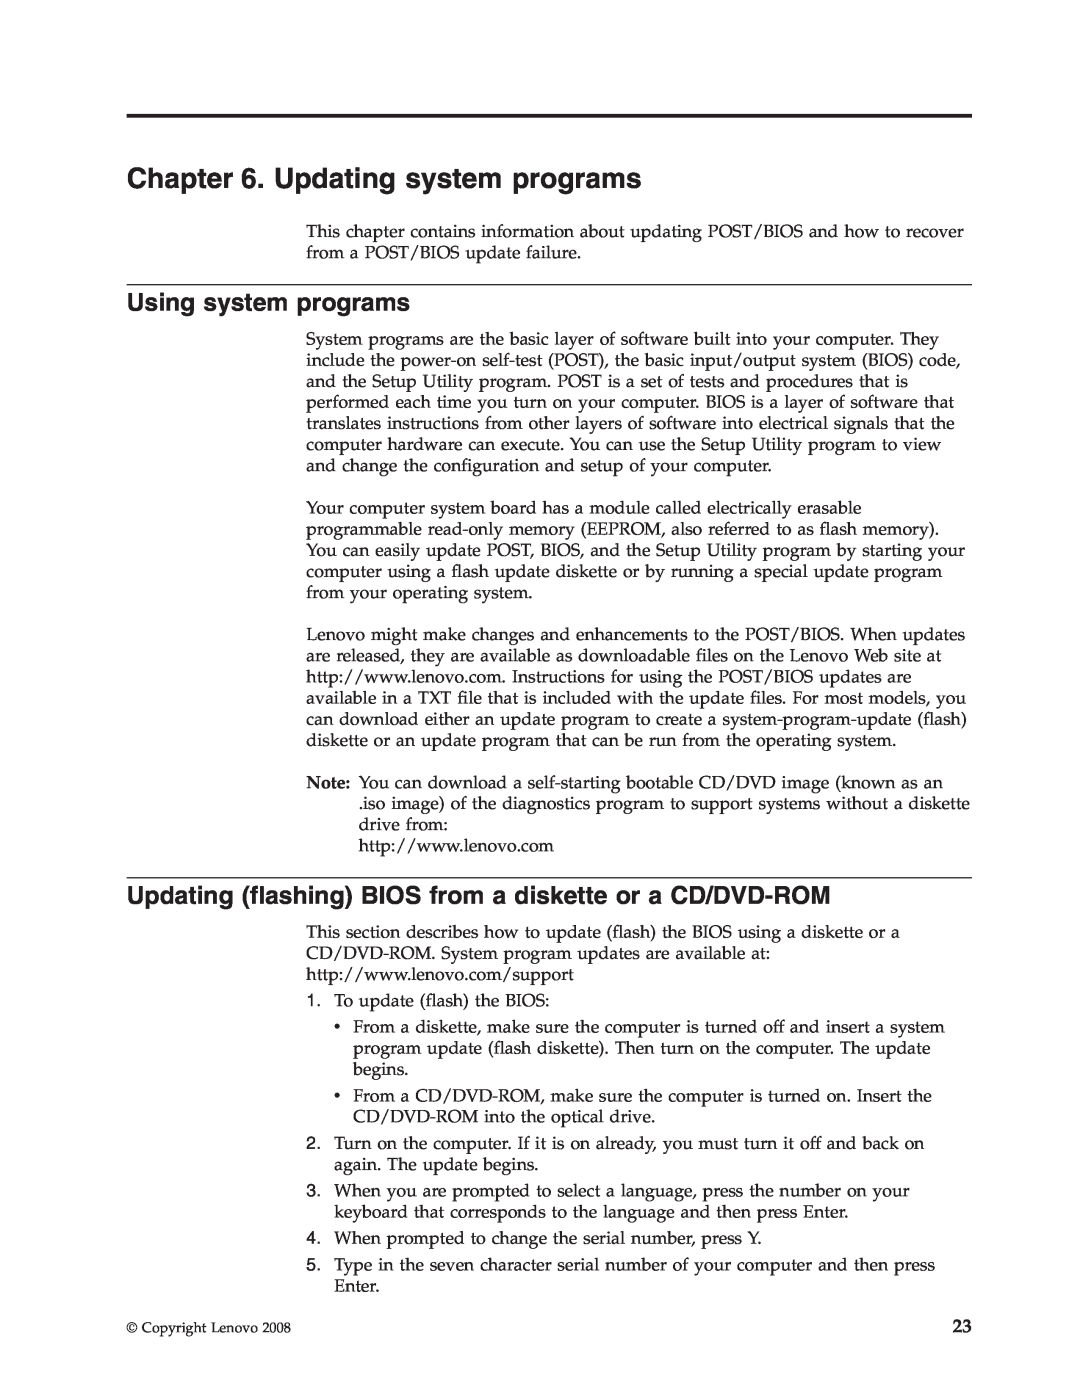 Lenovo 6306 manual Updating system programs, Using system programs 